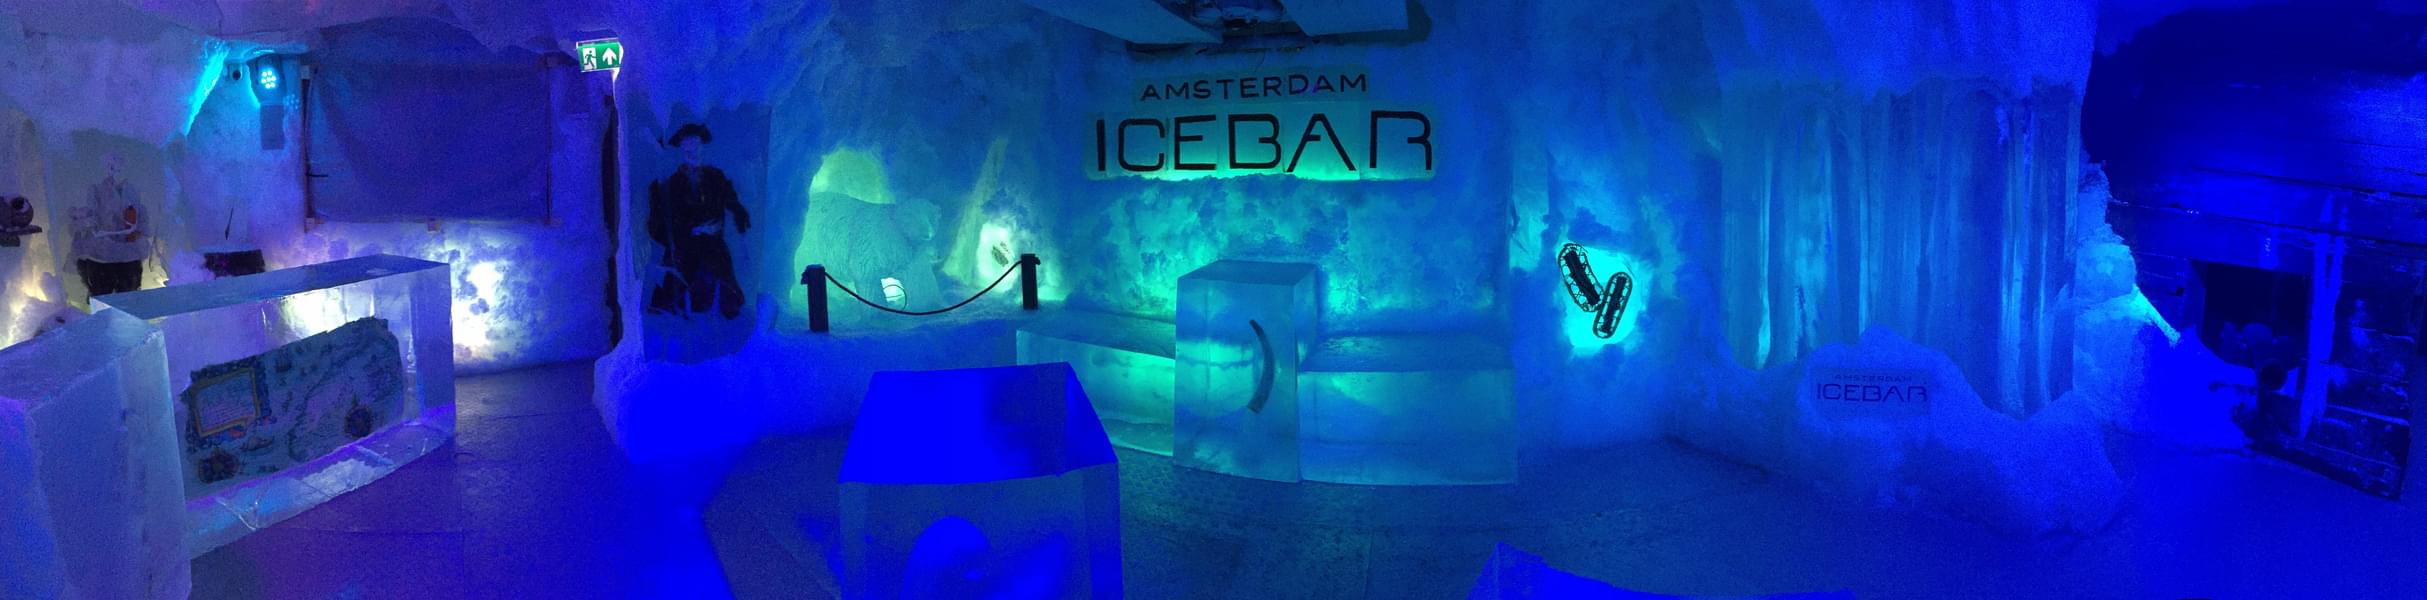 Chill at Amsterdam's Icebar